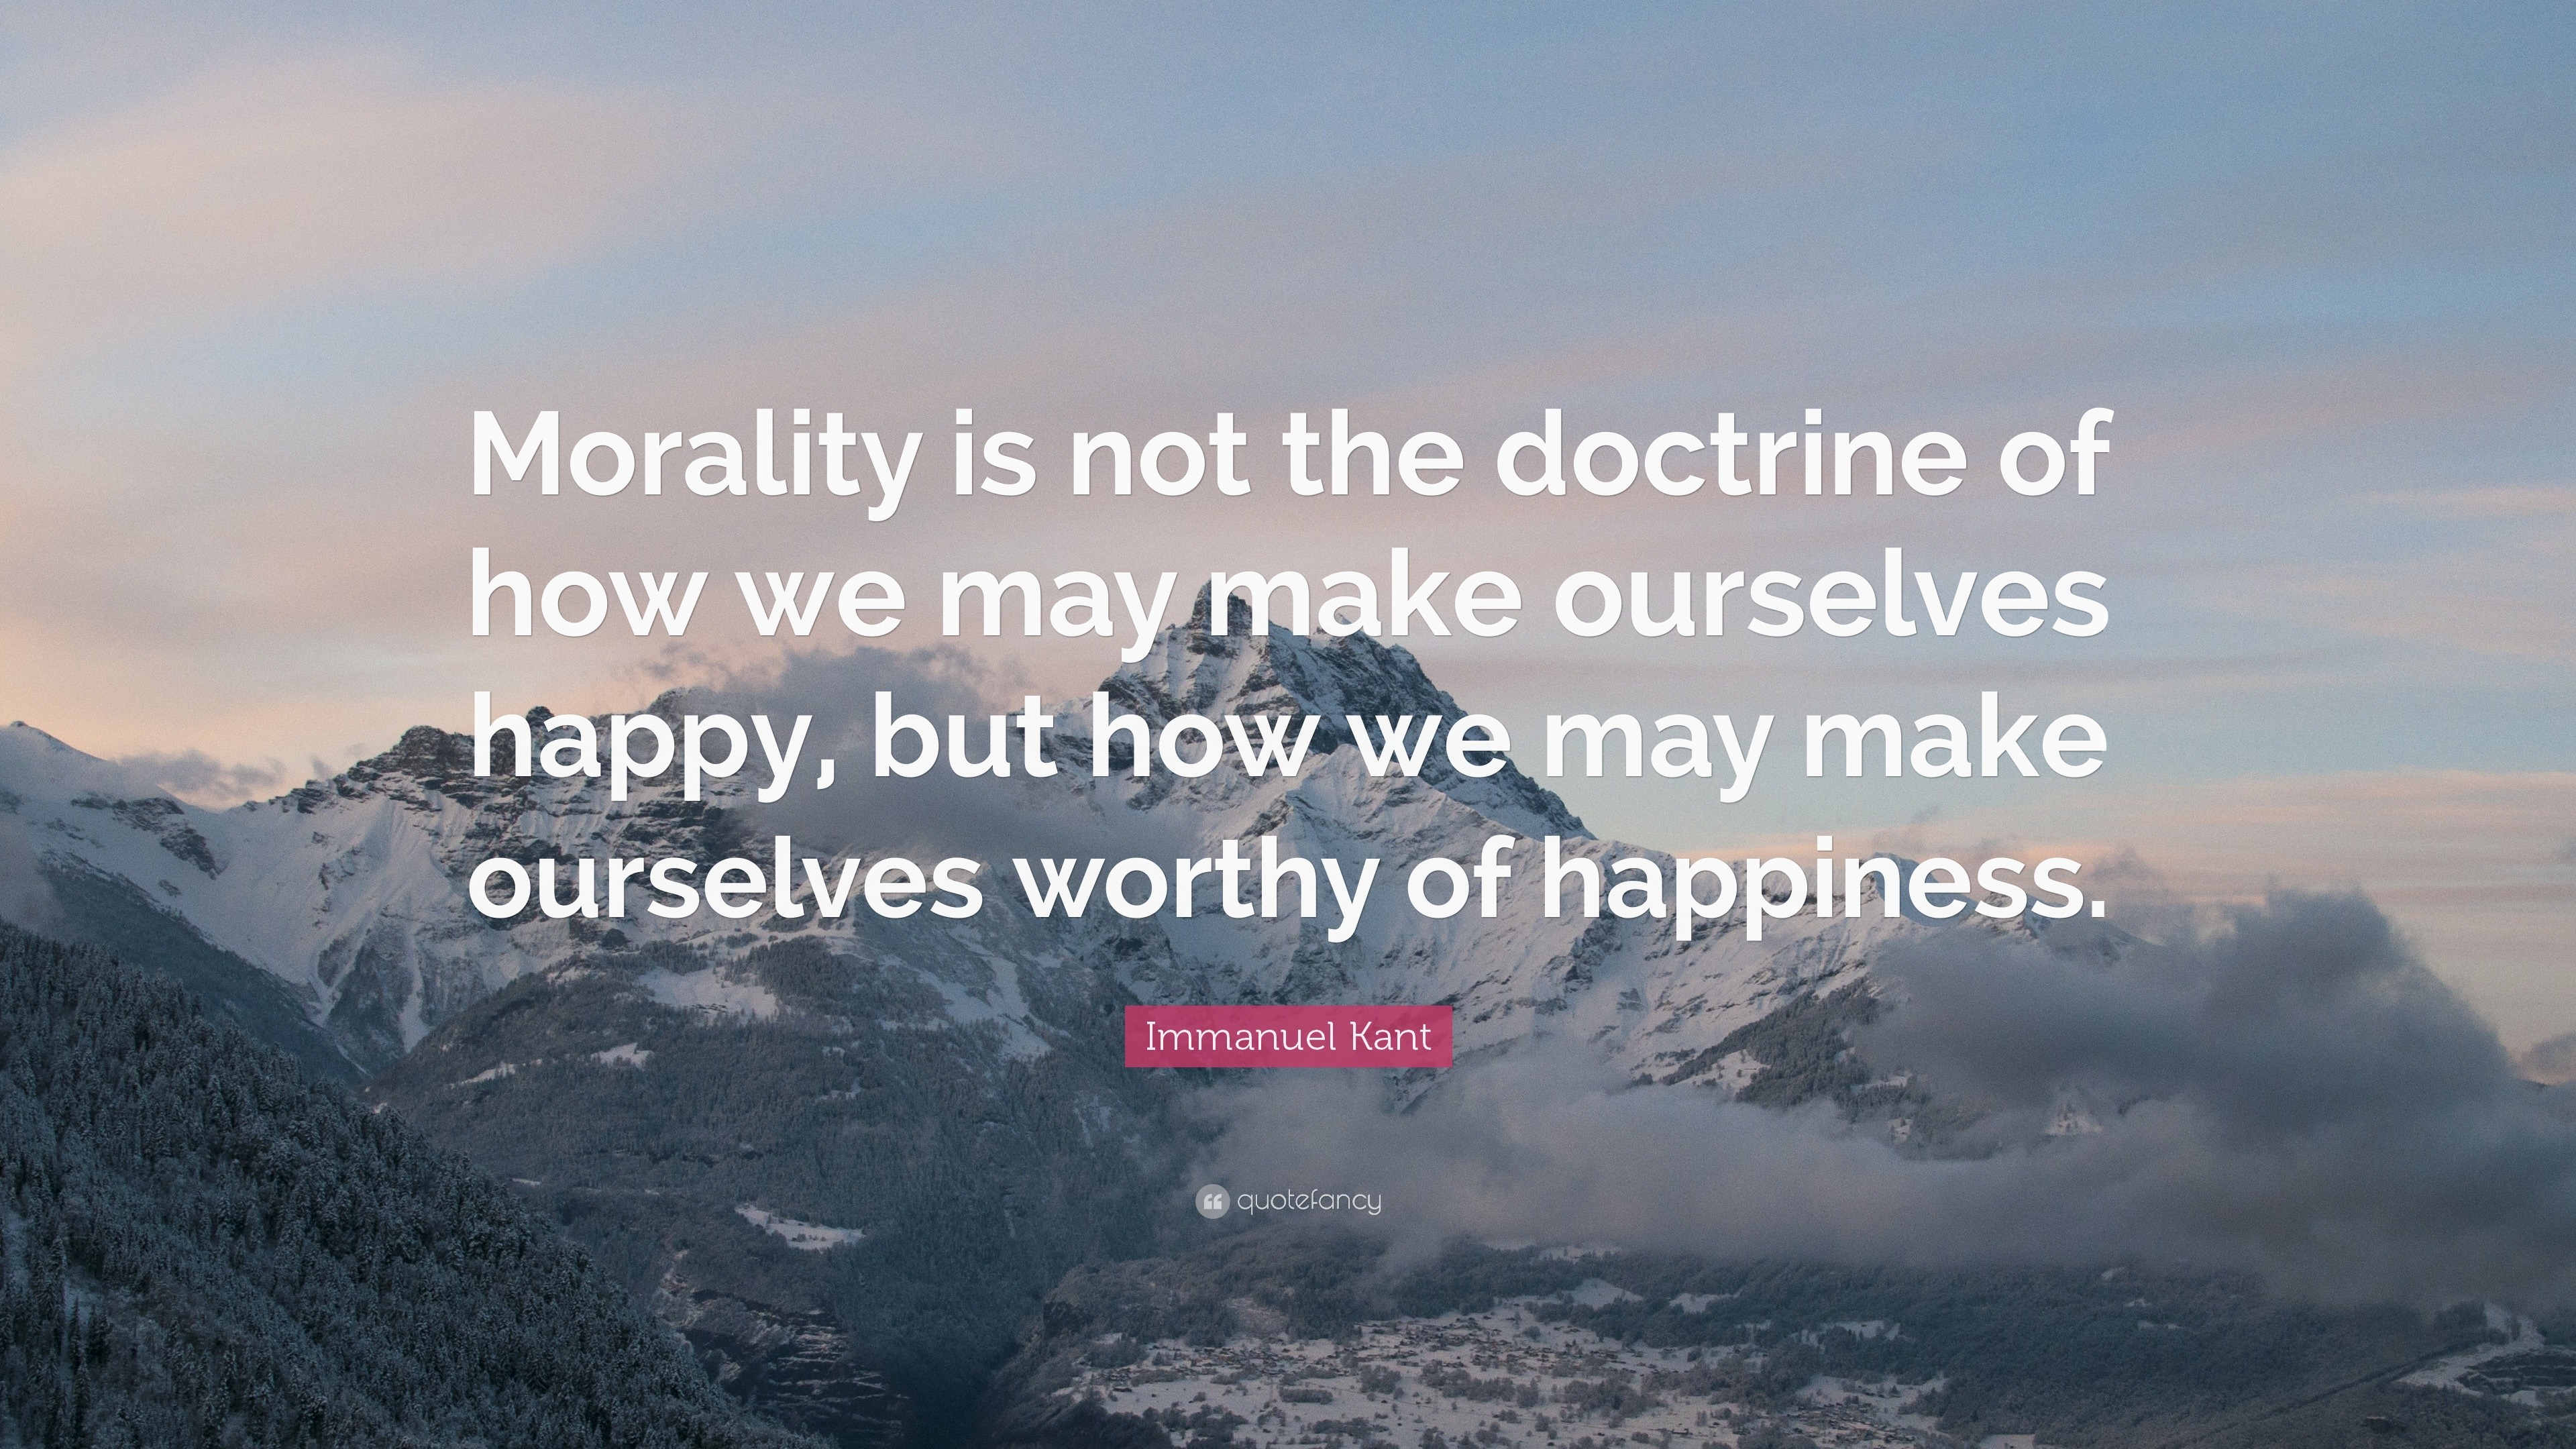 Immanuel Kant Morality